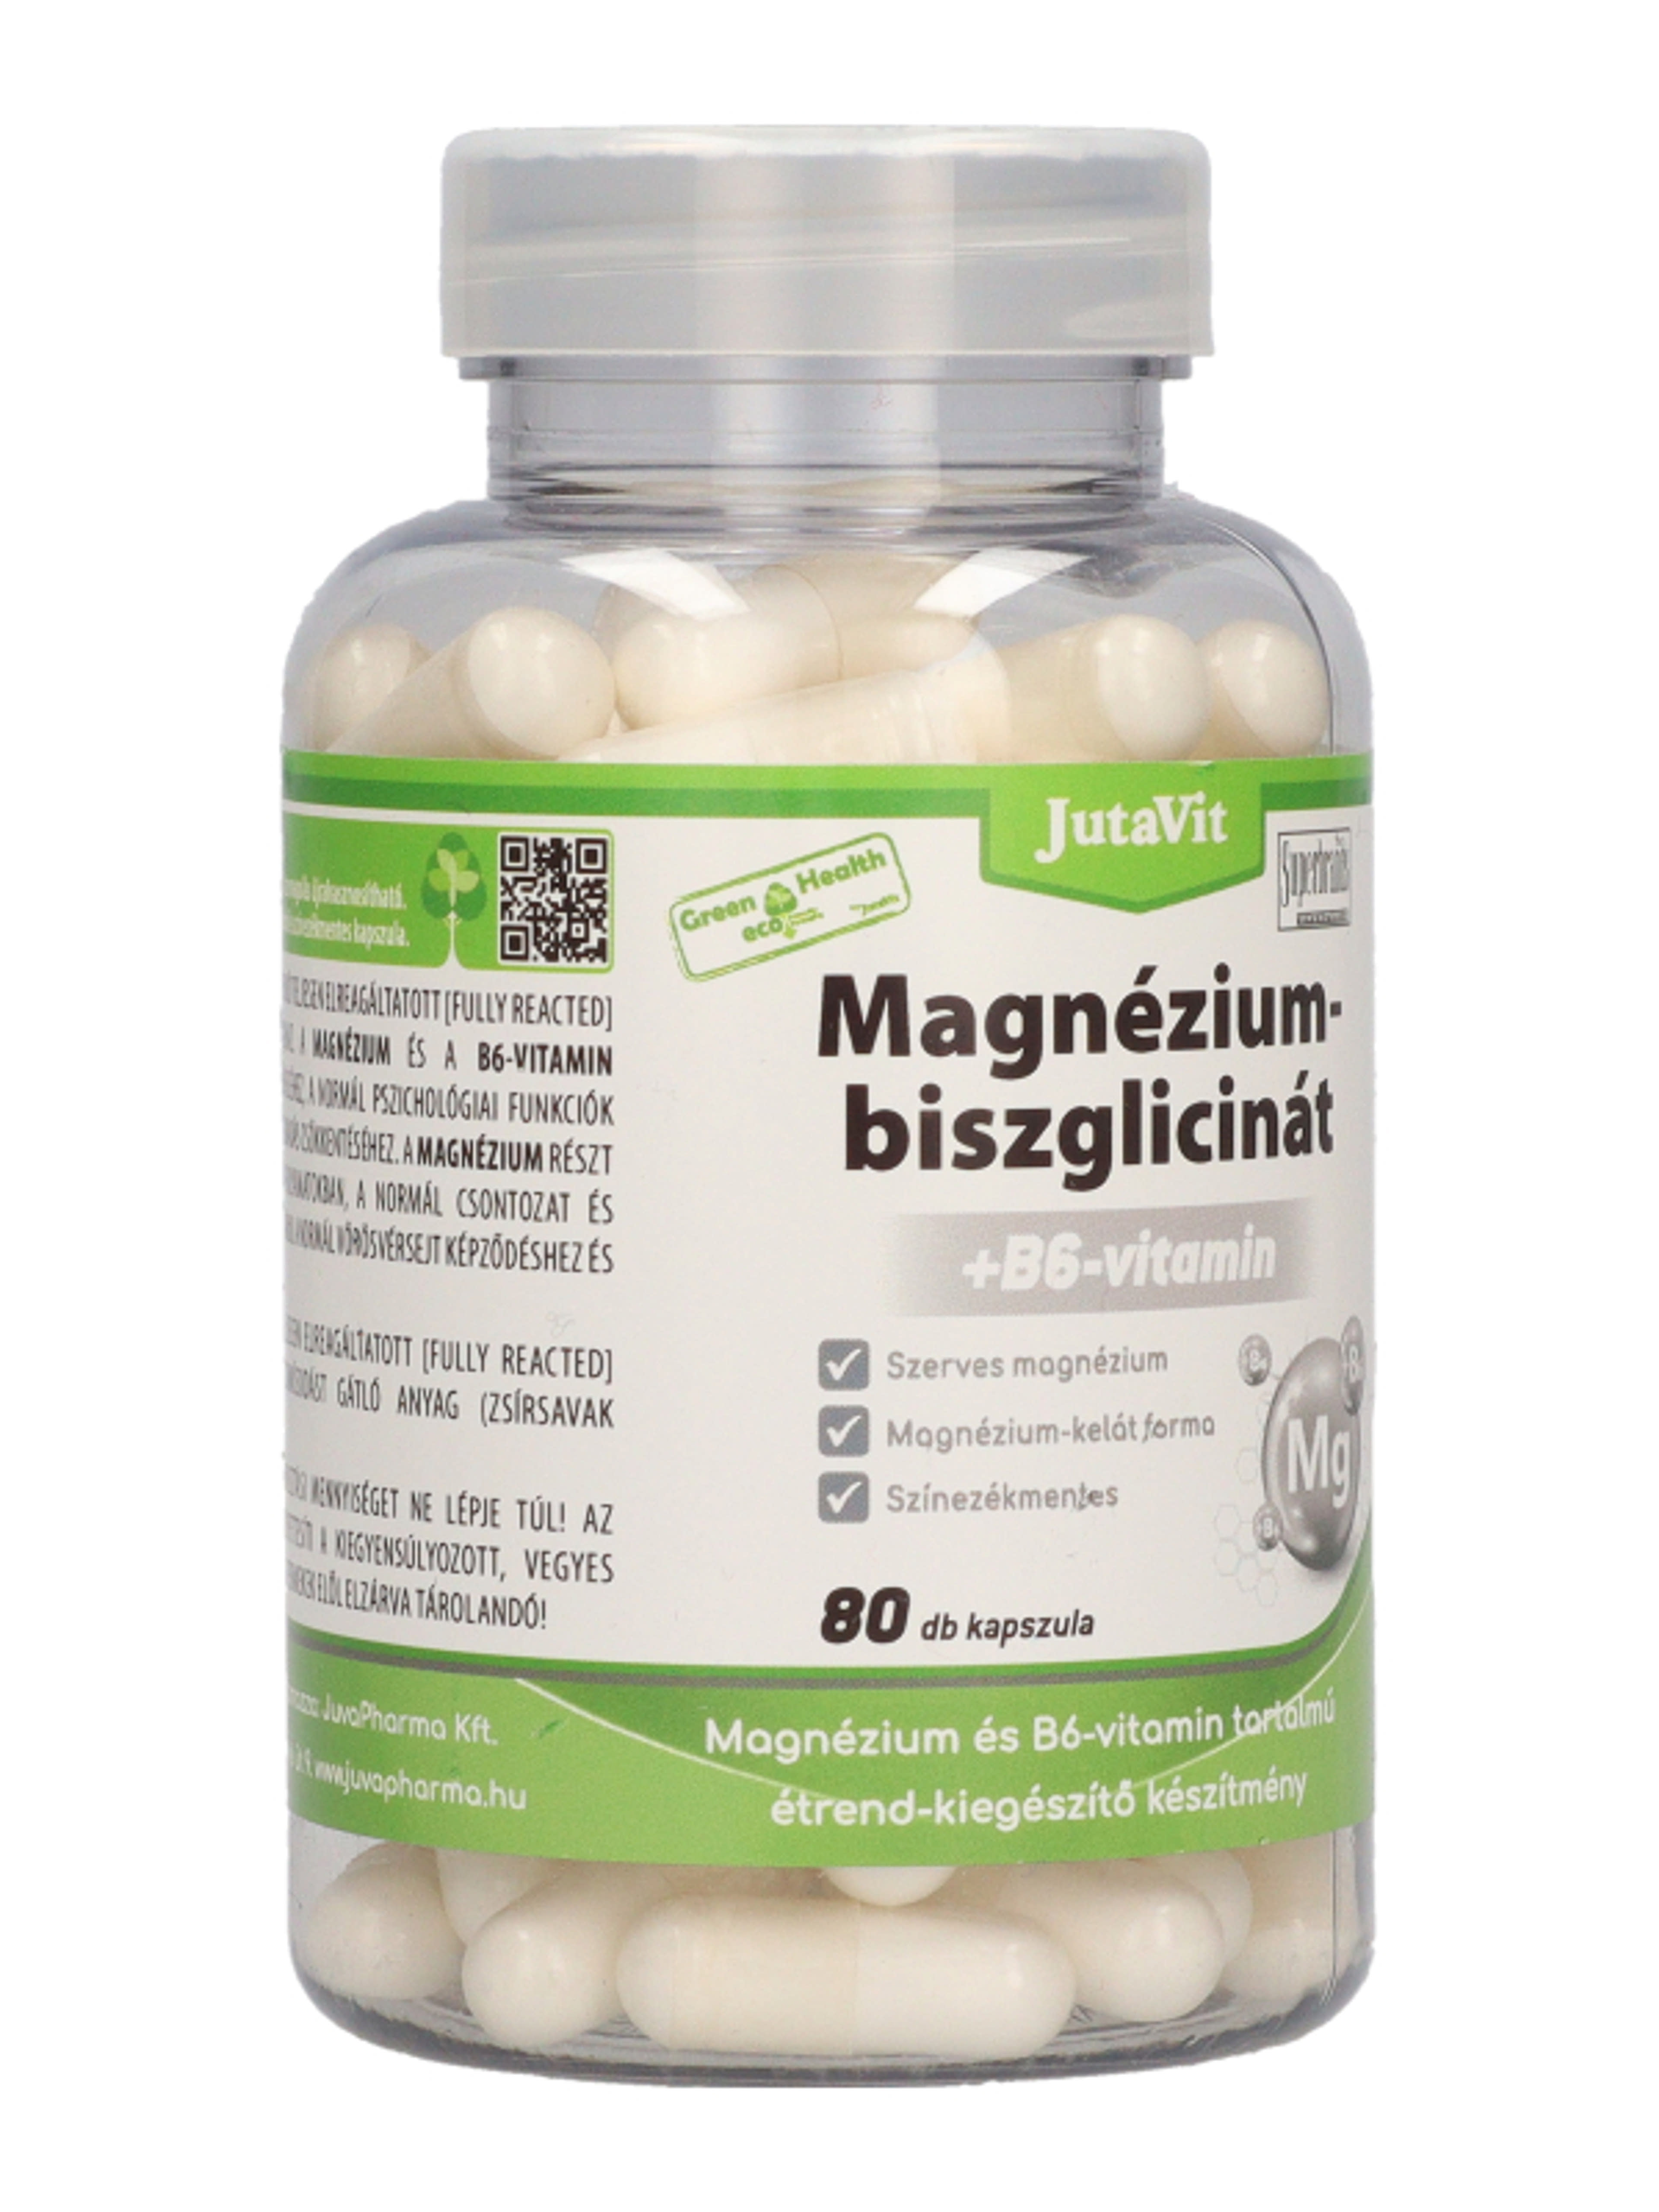 JutaVit Green&Health Magnézium-biszglicinát + B6-vitamin kapszula - 80 db-5